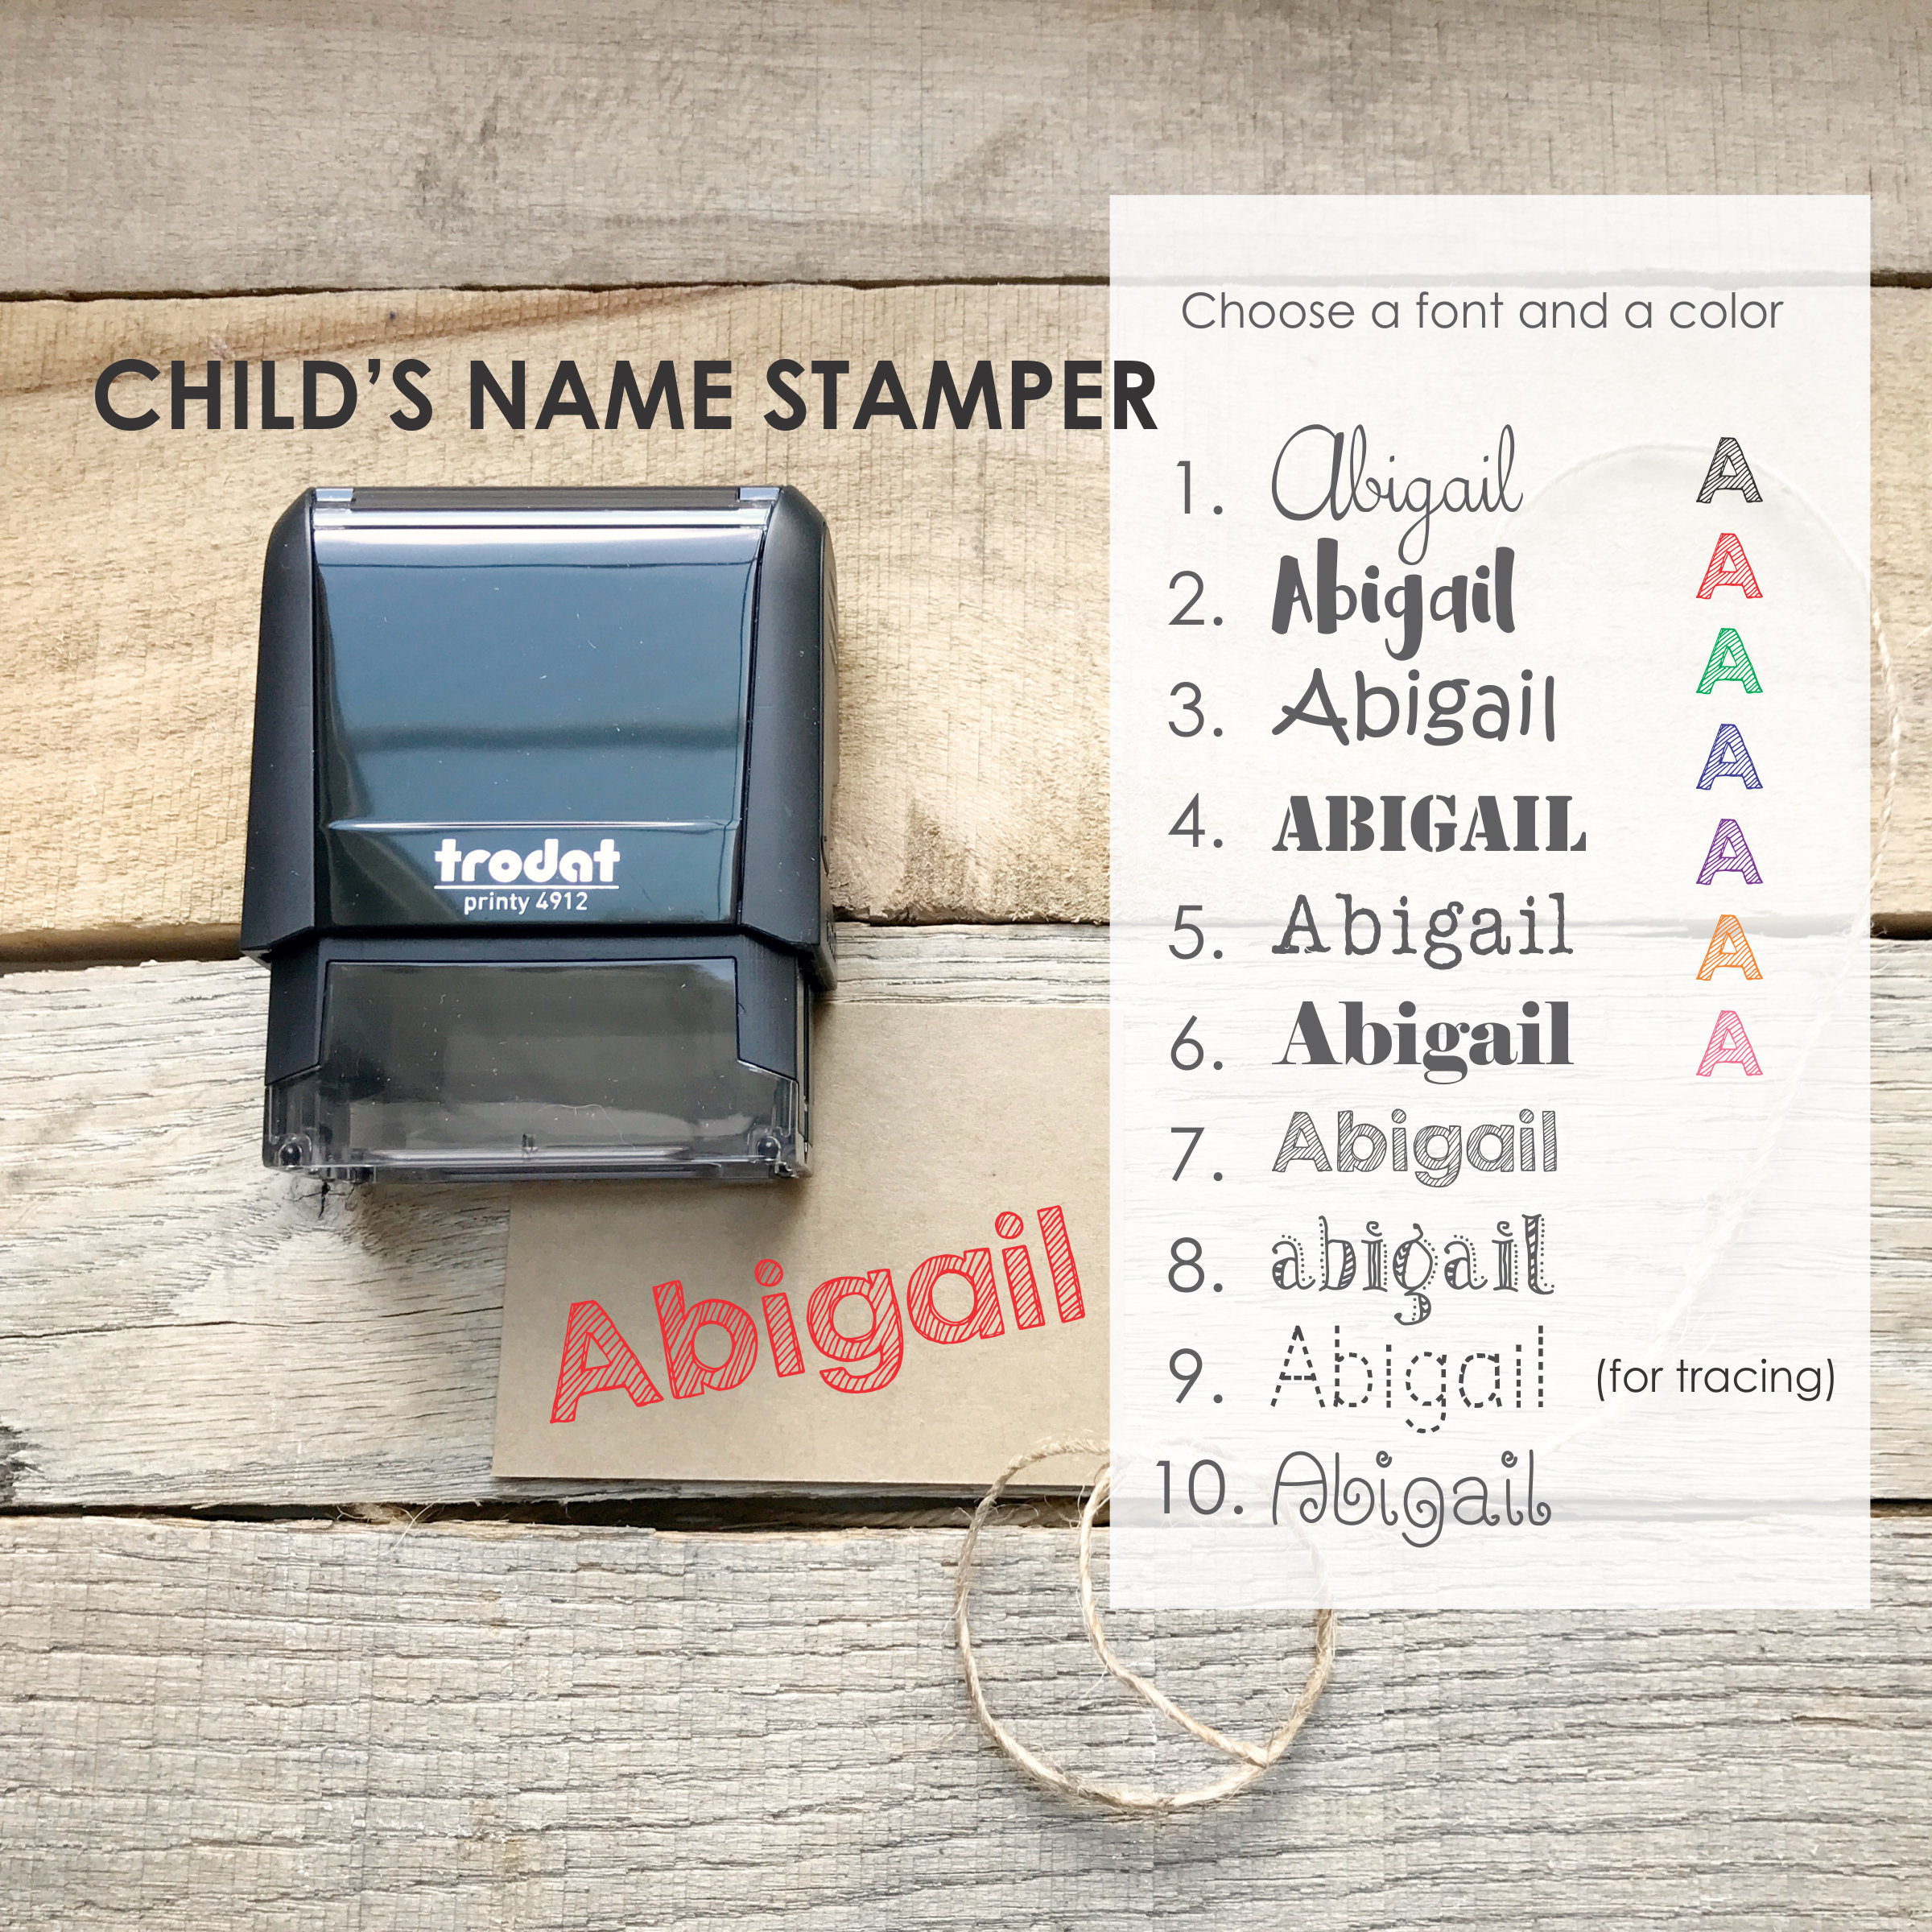 Personalized Name Stamp, Medical Pocket Stamper, Self-inking Gift